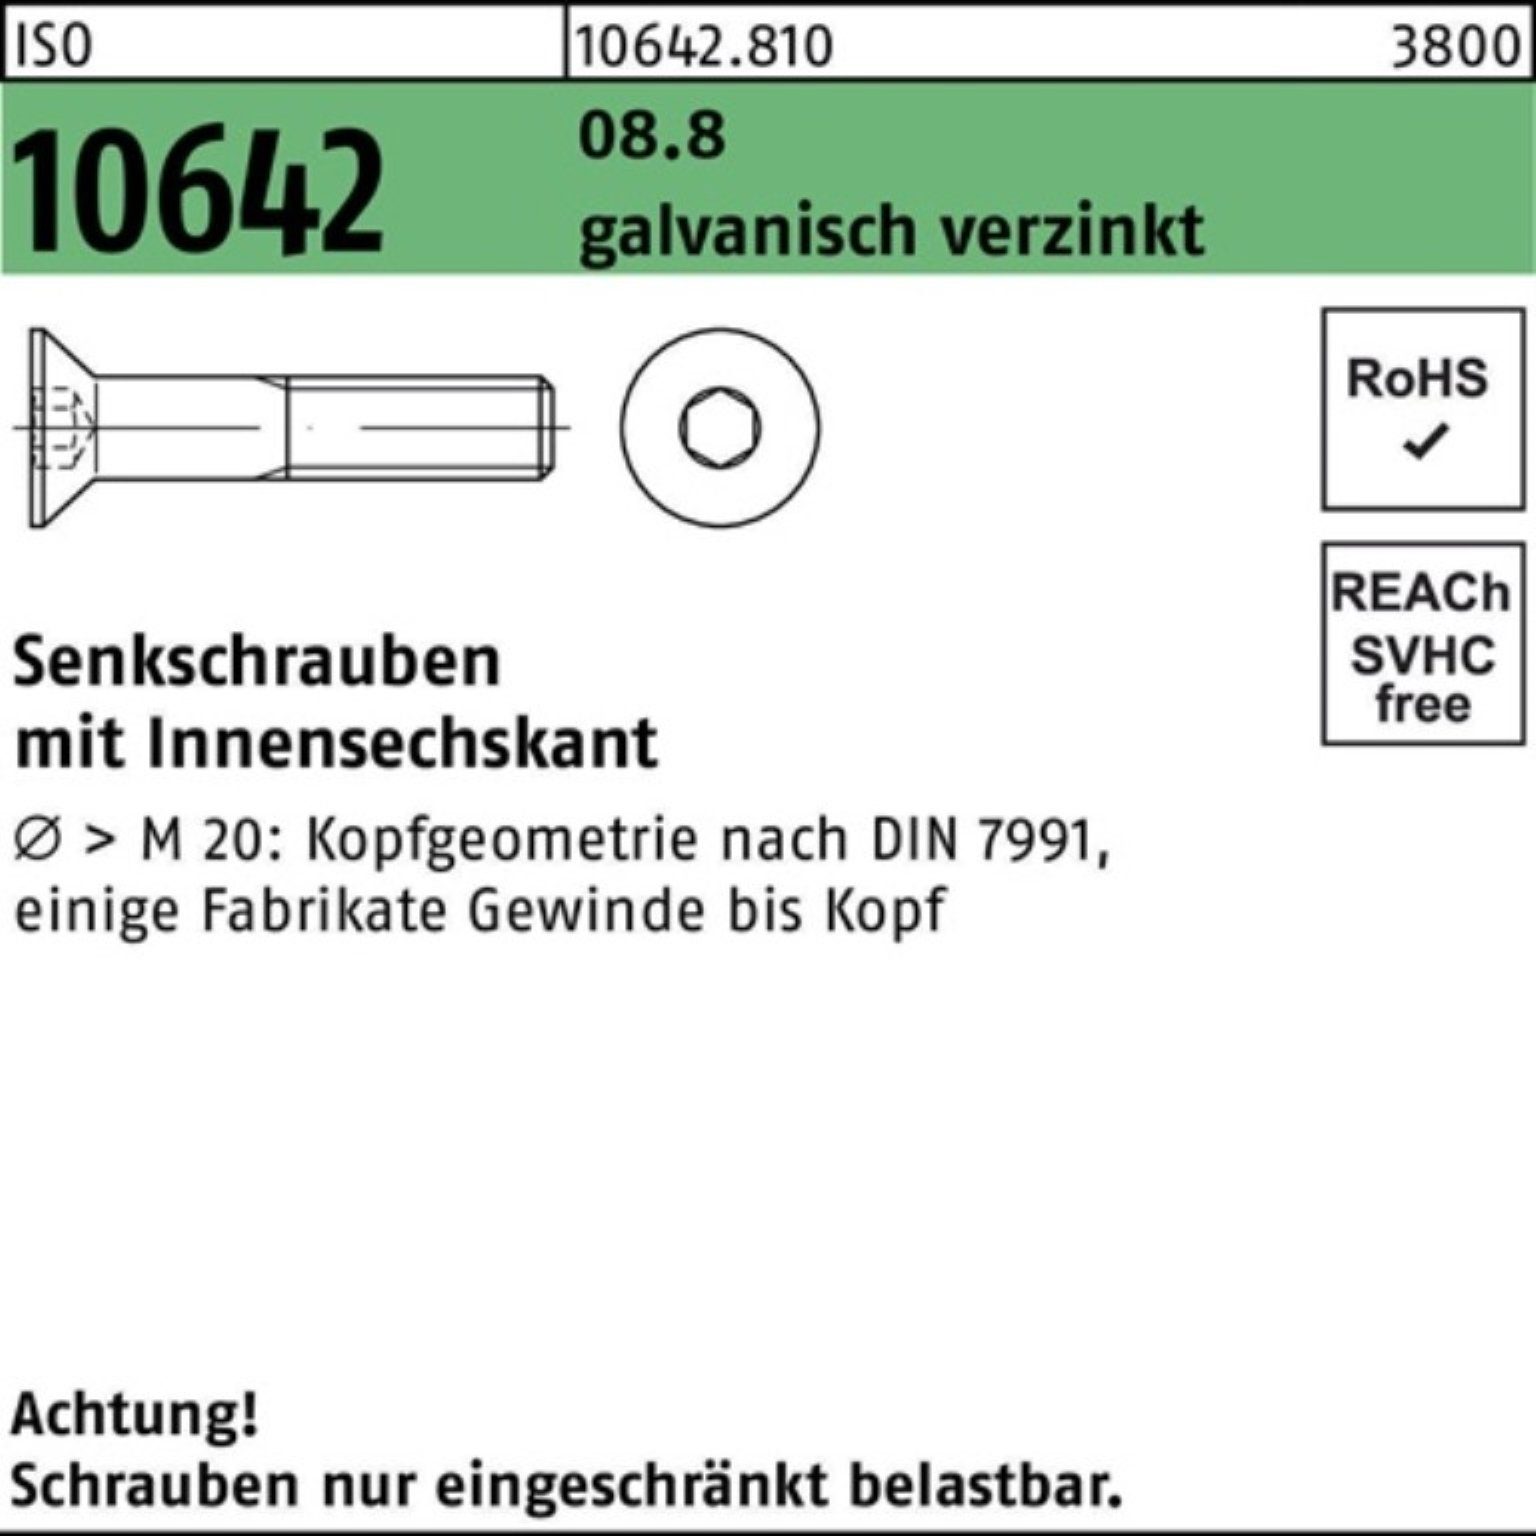 Reyher Senkschraube 500 22 galv.verz. Pack 10642 500er Senkschraube 8.8 ISO M6x Innen-6kt